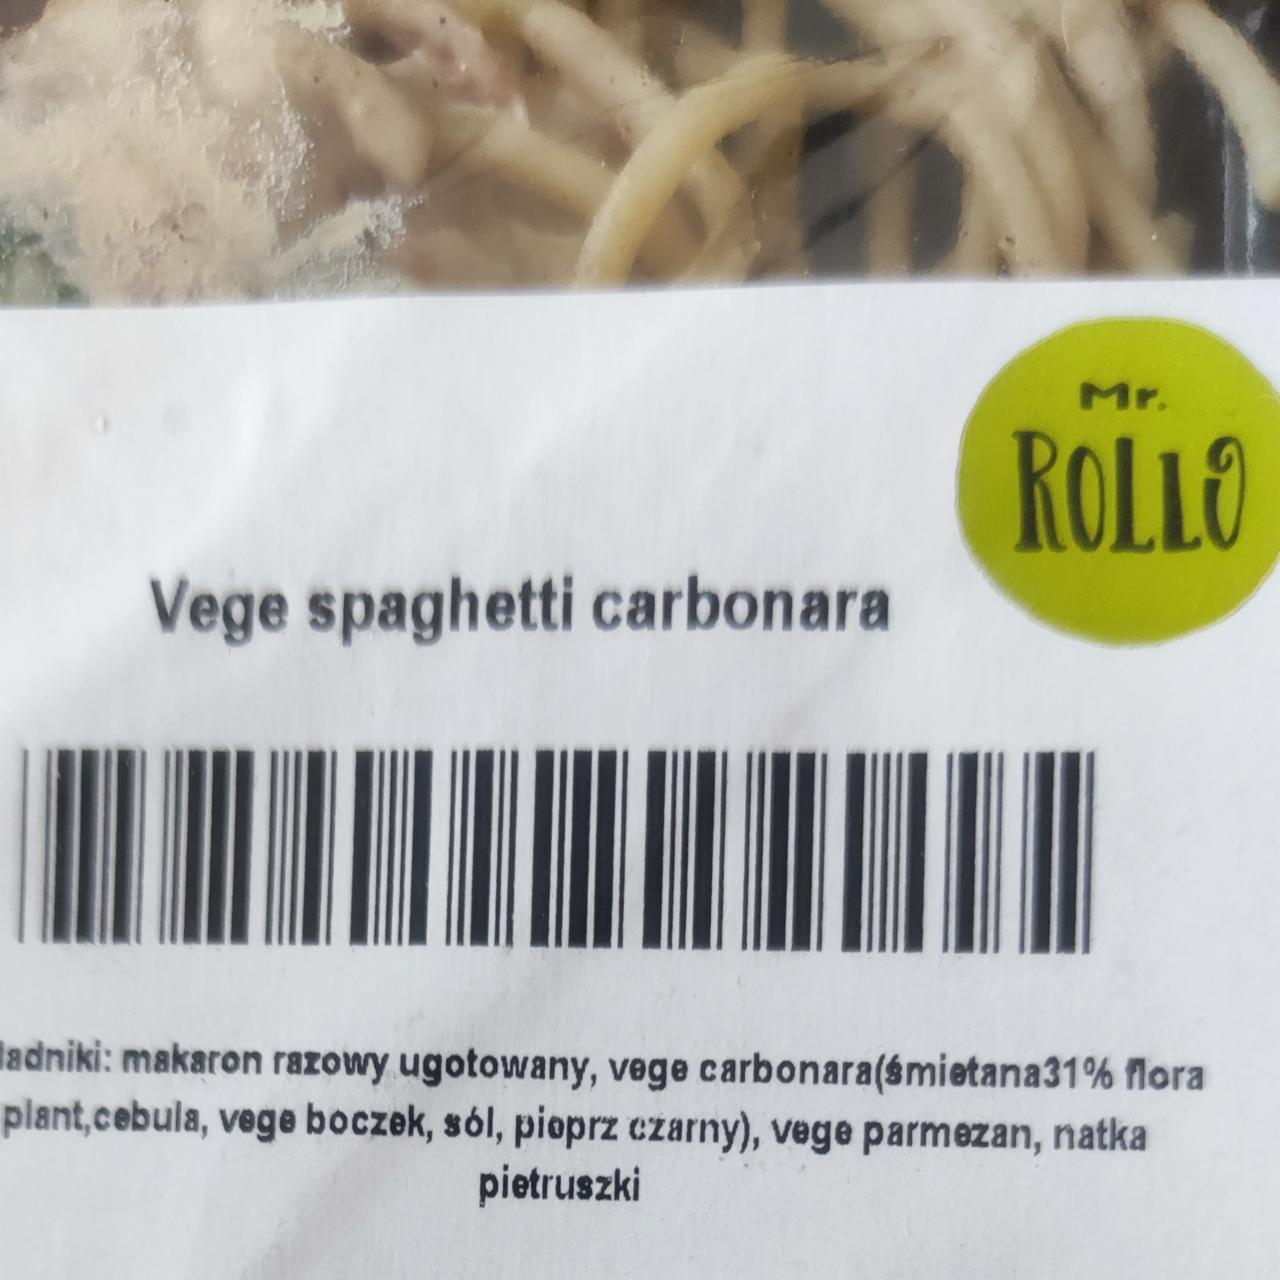 Zdjęcia - Vege spaghetti carbonara Mr. Rollo